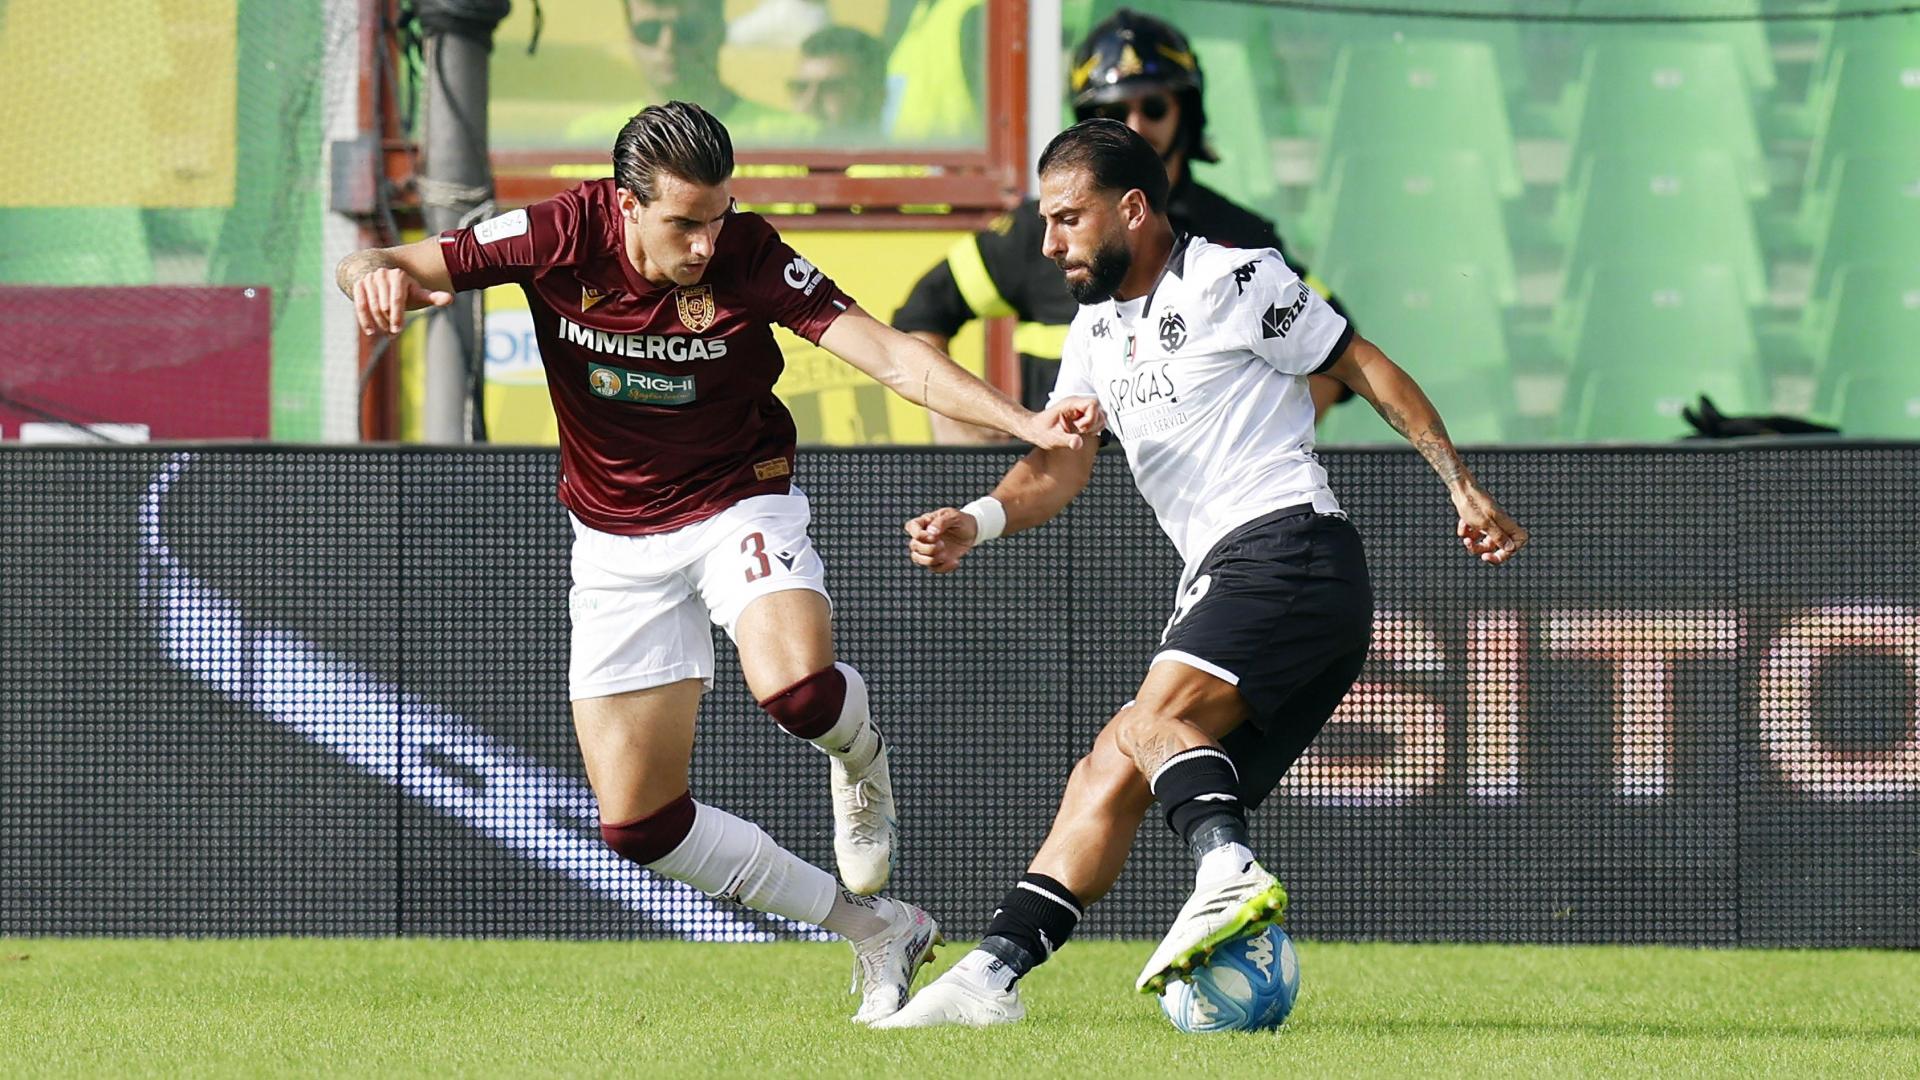 Serie BKT 23/24: the match report of Reggiana-Spezia